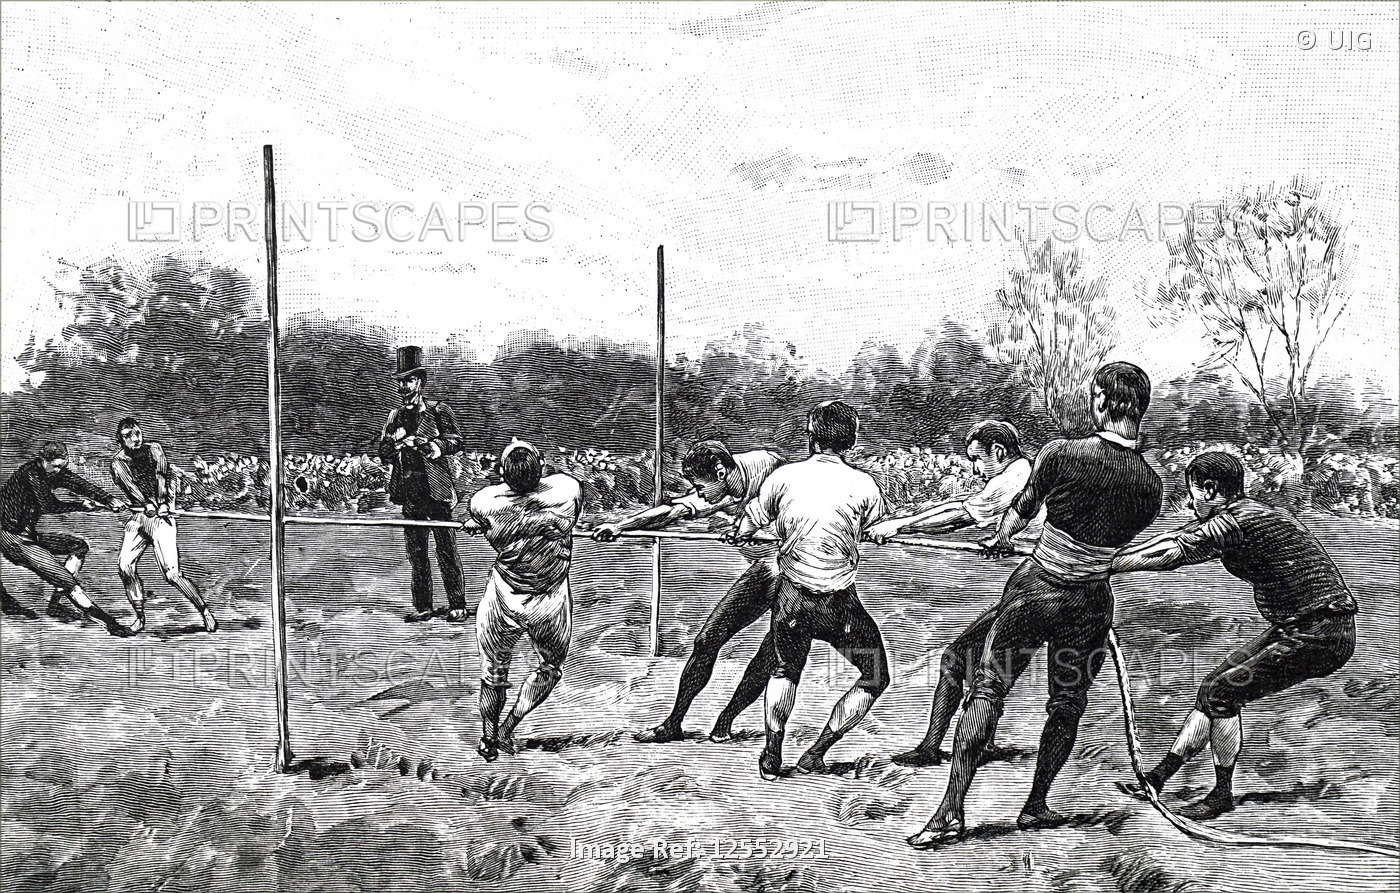 Illustration depicting men playing tug of war, 19th century